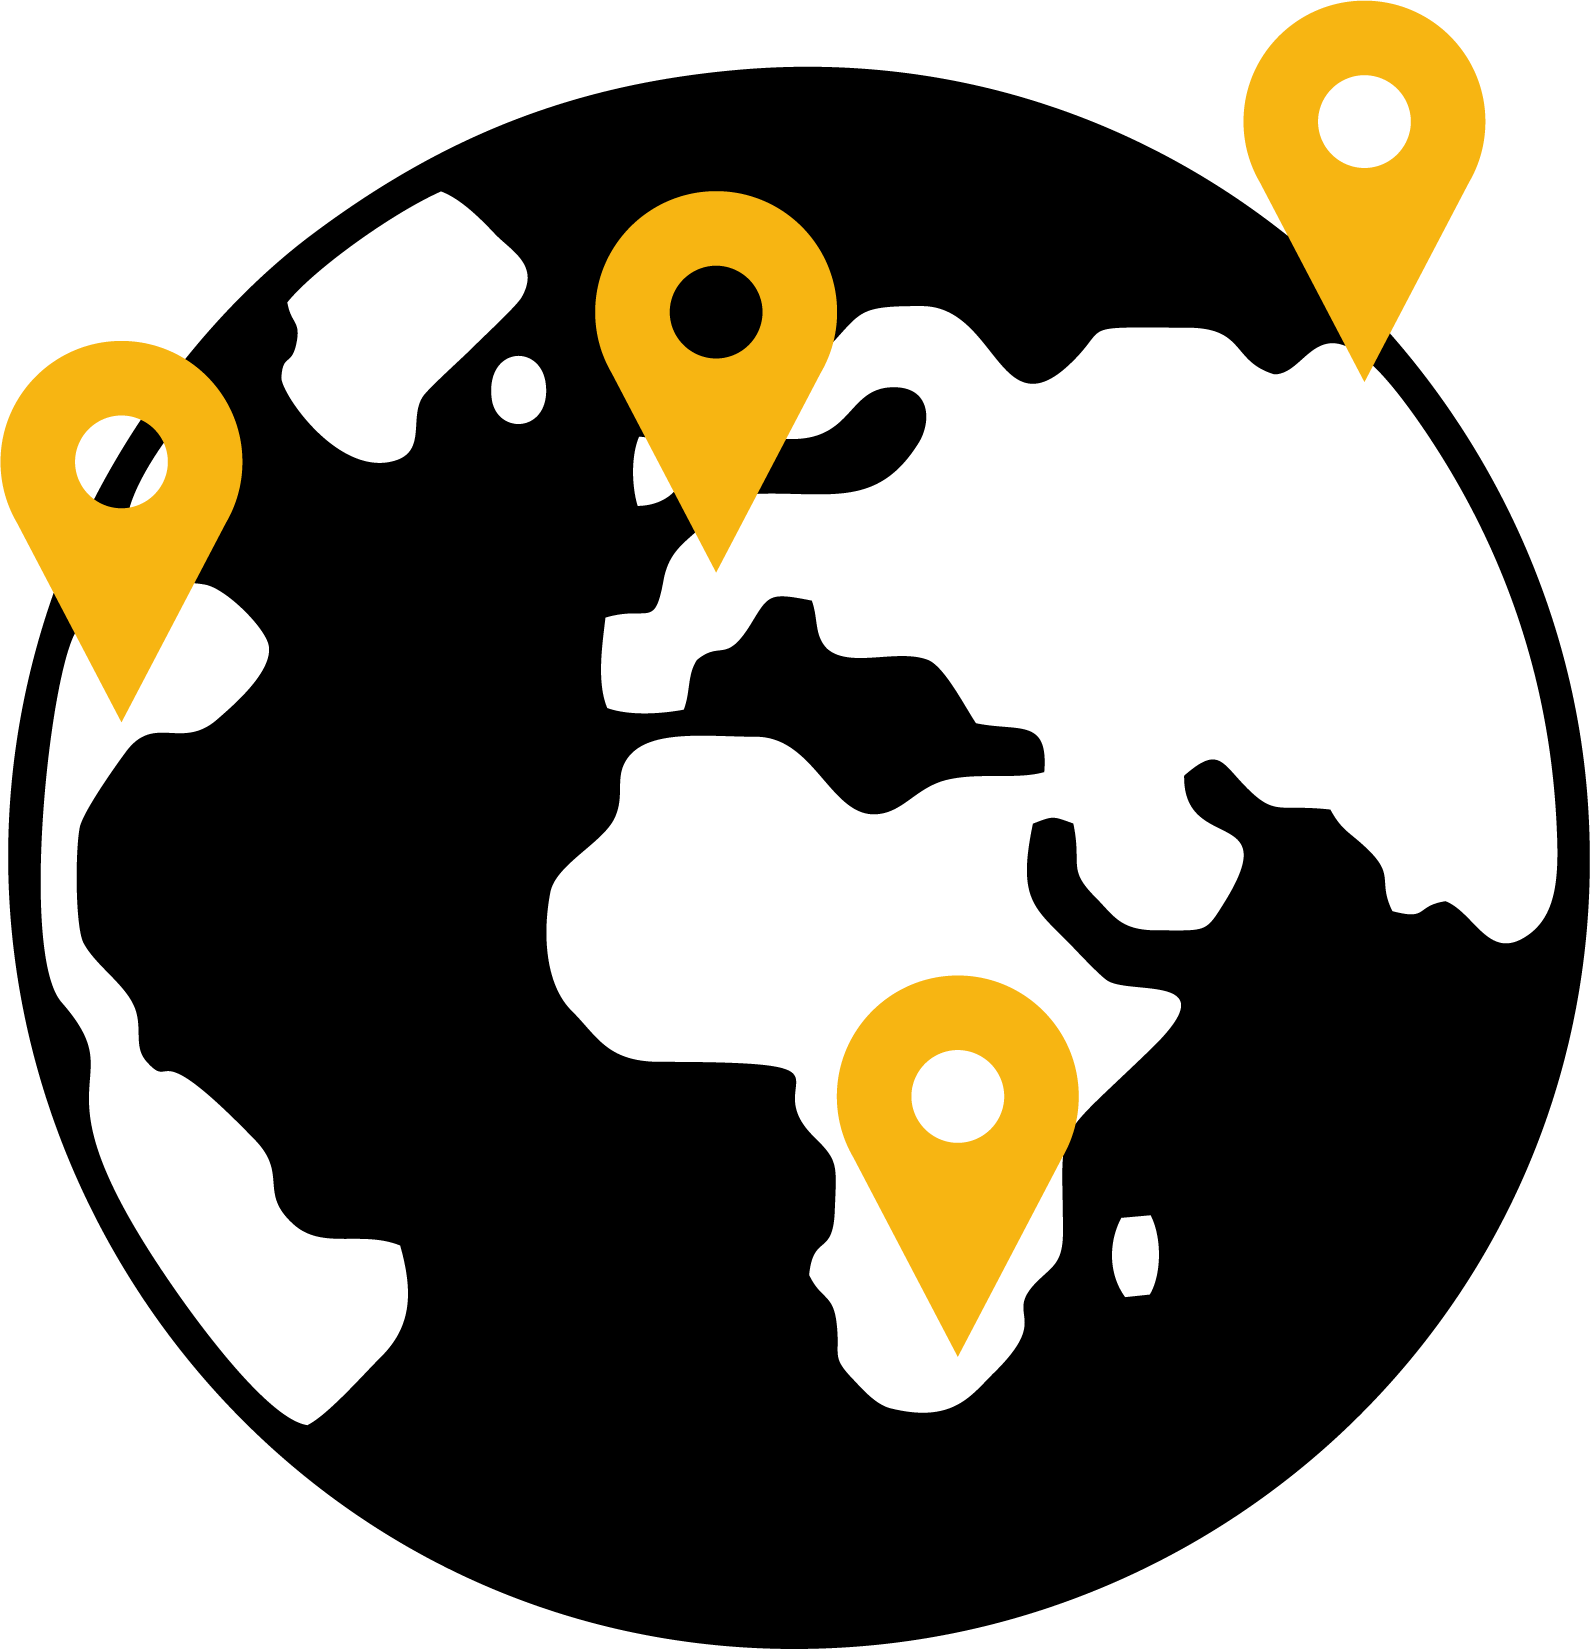 Black and white globe with yellow location symbols around it